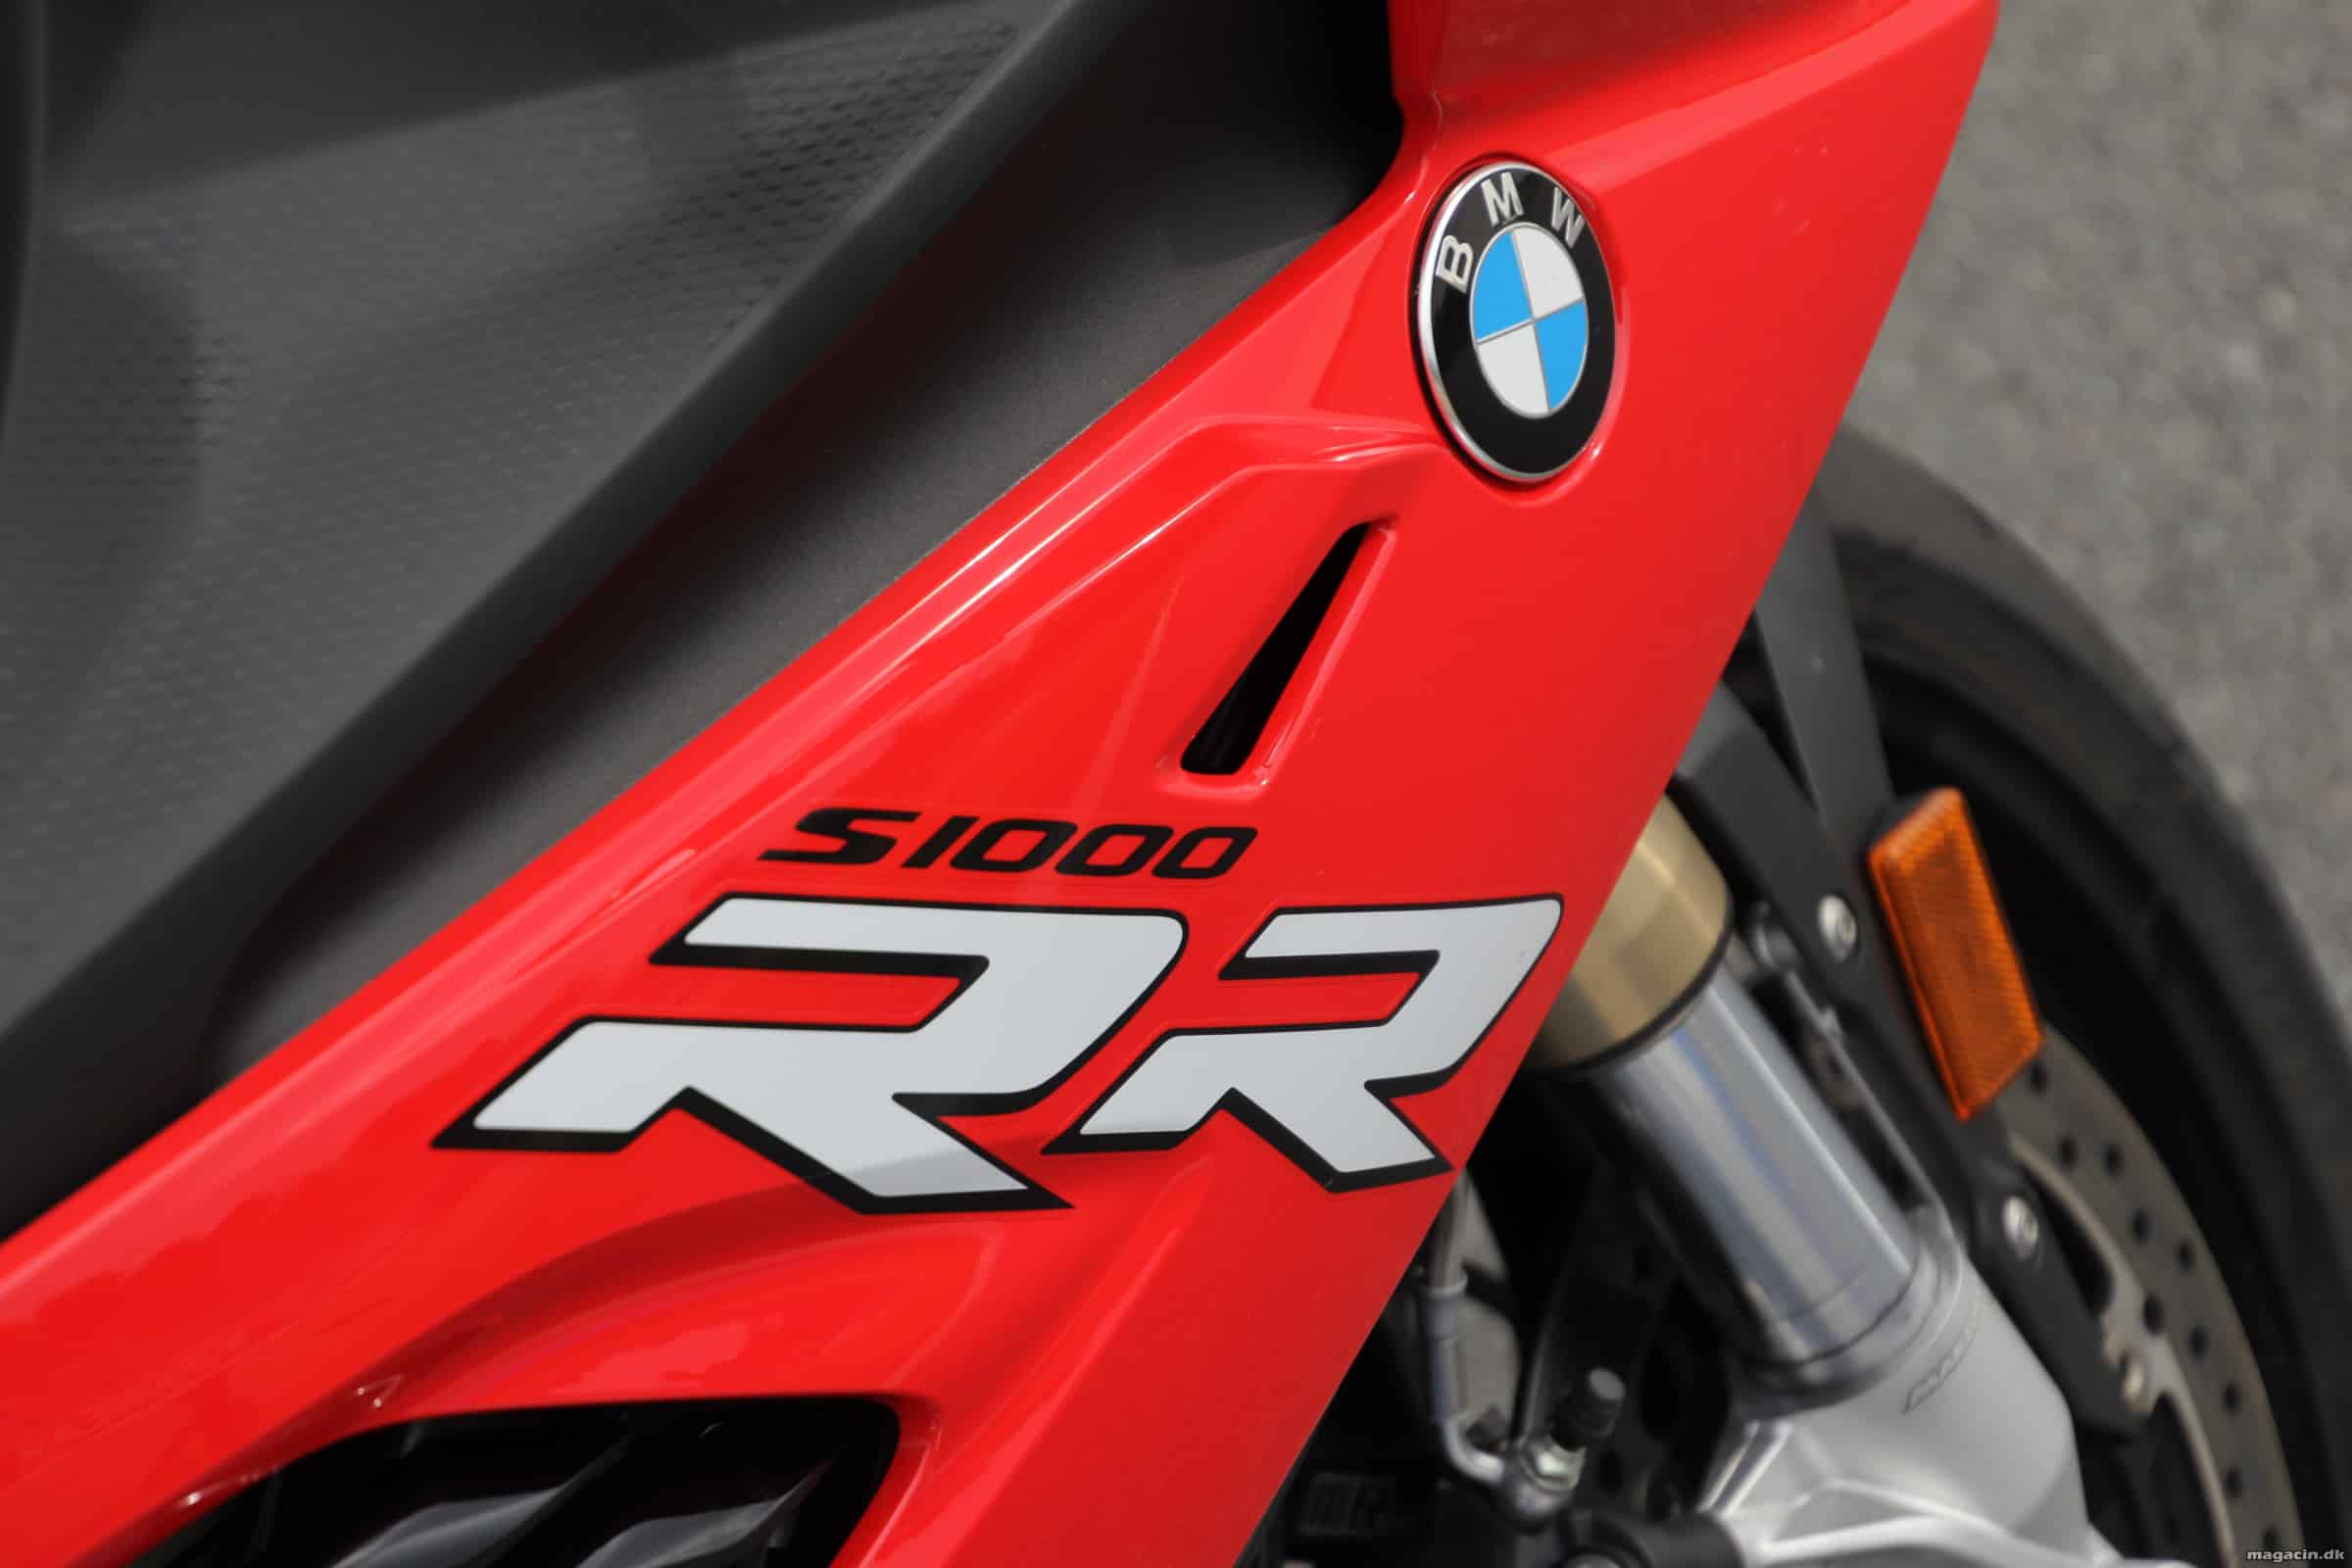 Test: BMW S1000RR 2019